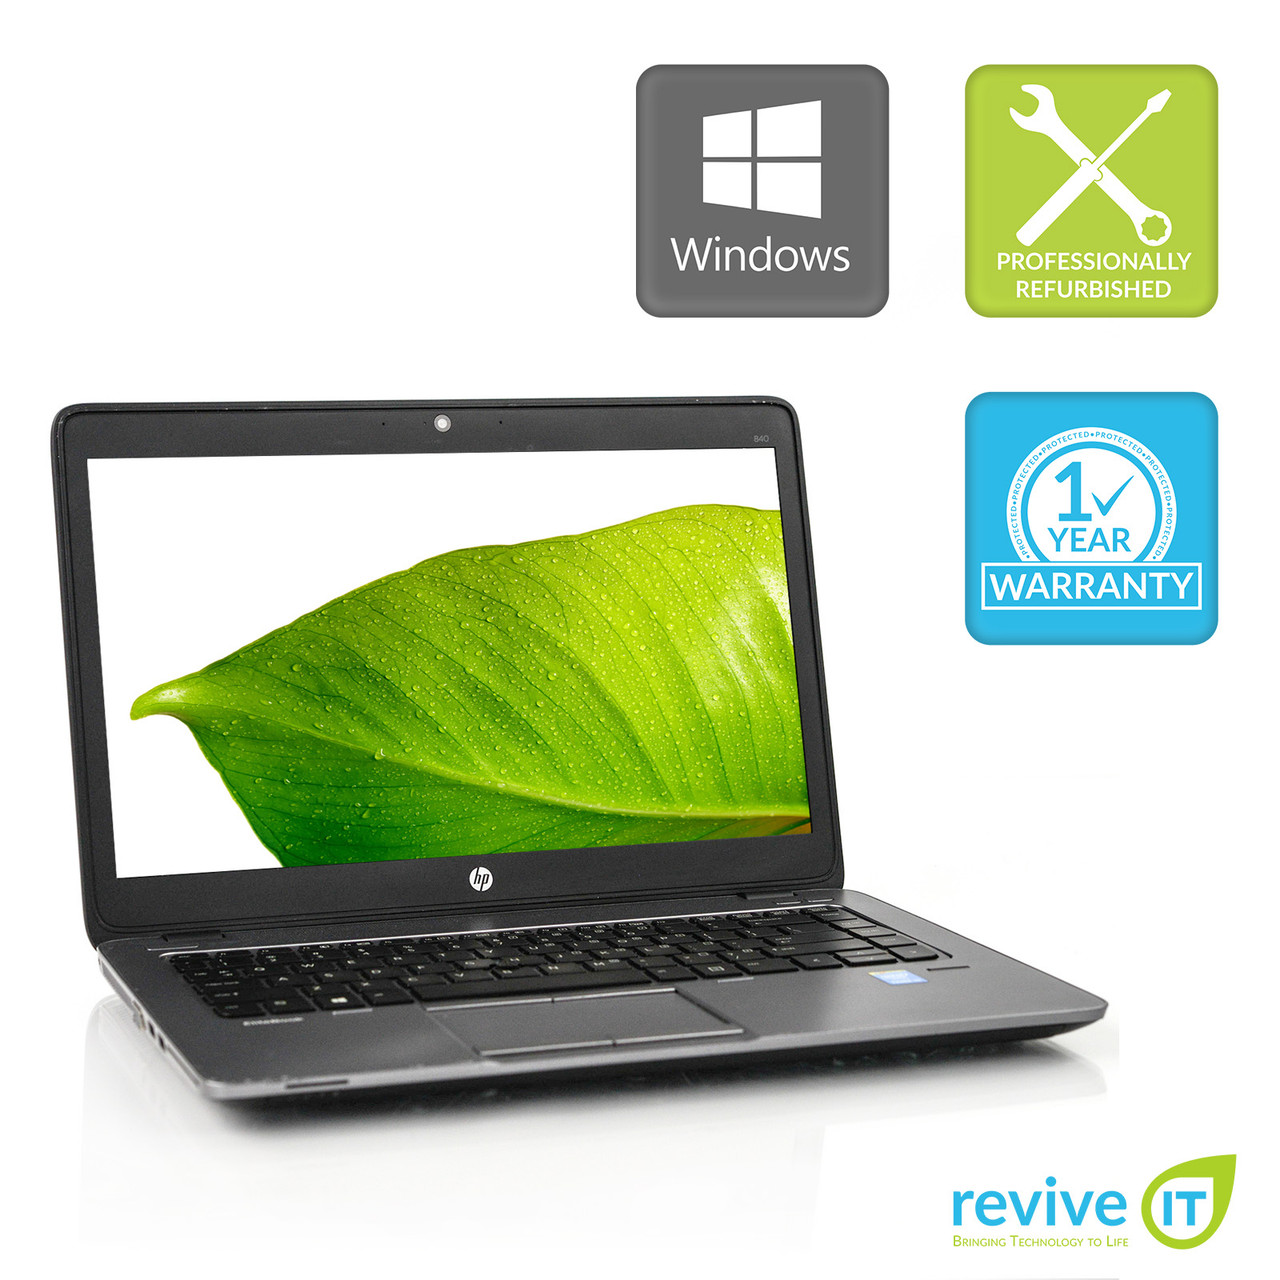 resultaat wortel briefpapier HP EliteBook 840 G2 Ultrabook i5 Dual-Core 8GB 256GB SSD Win 10 Pro |  Revive IT